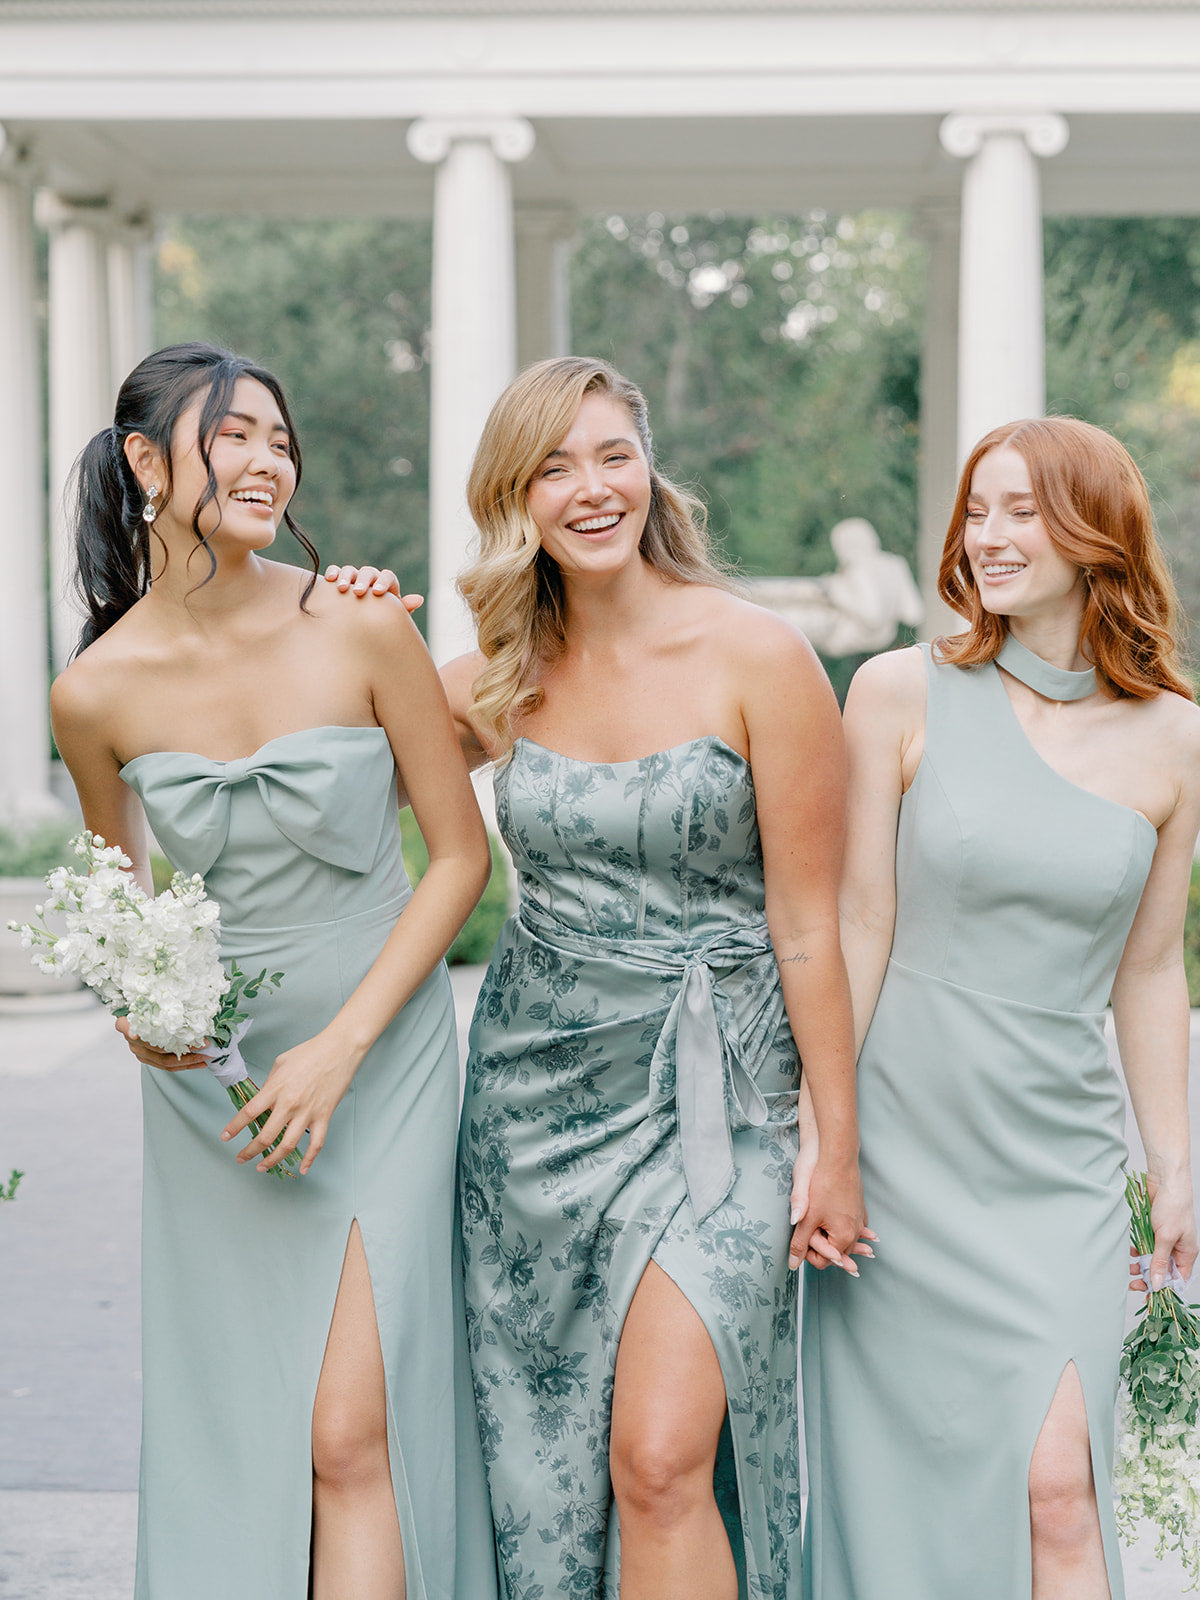 revelry bridesmaids dresses